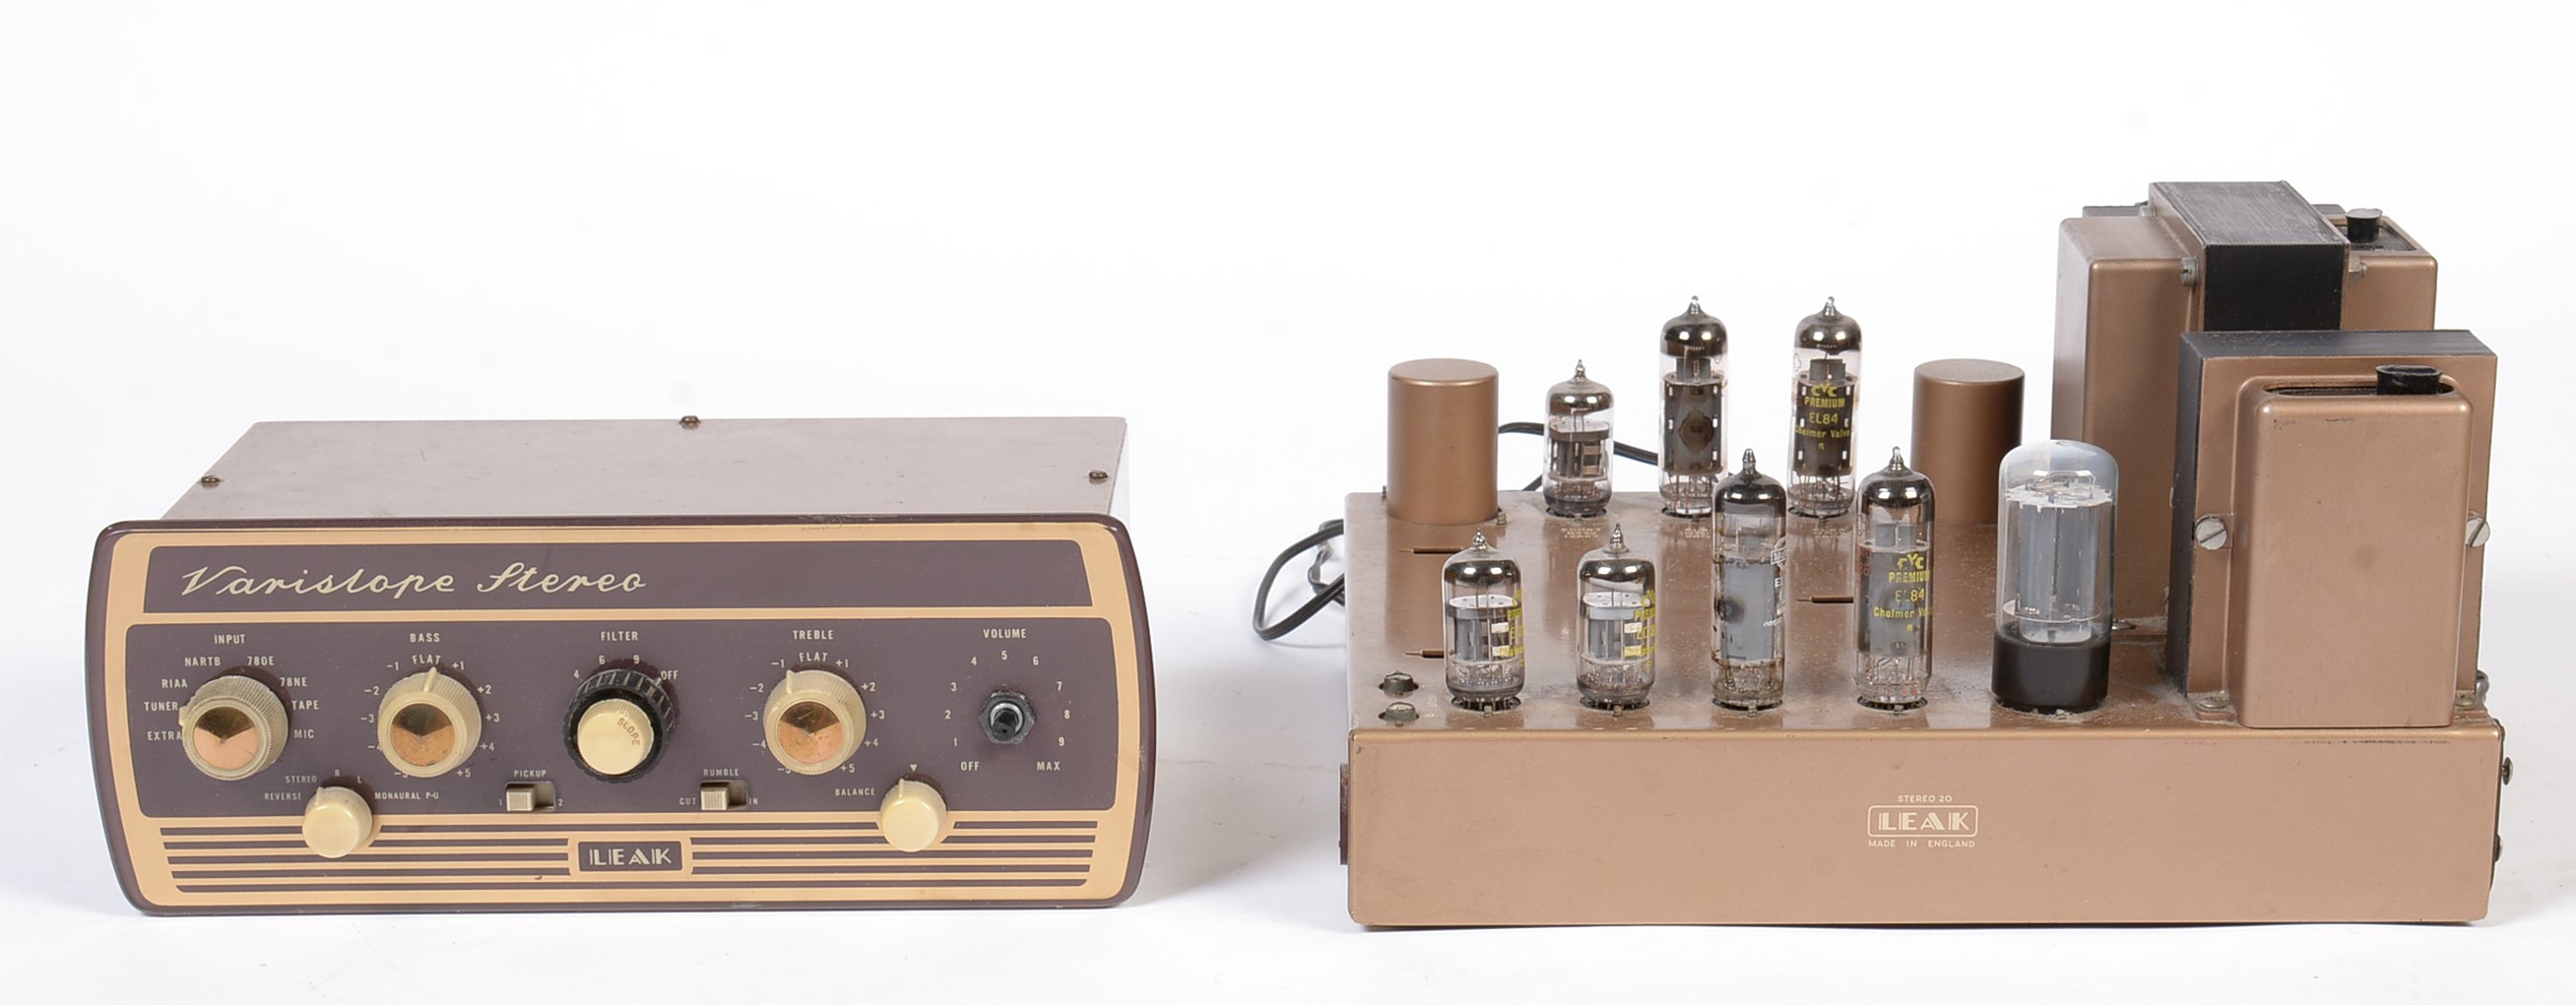 Leak Stereo 20 amplifier and a Leak Varislope pre-amp